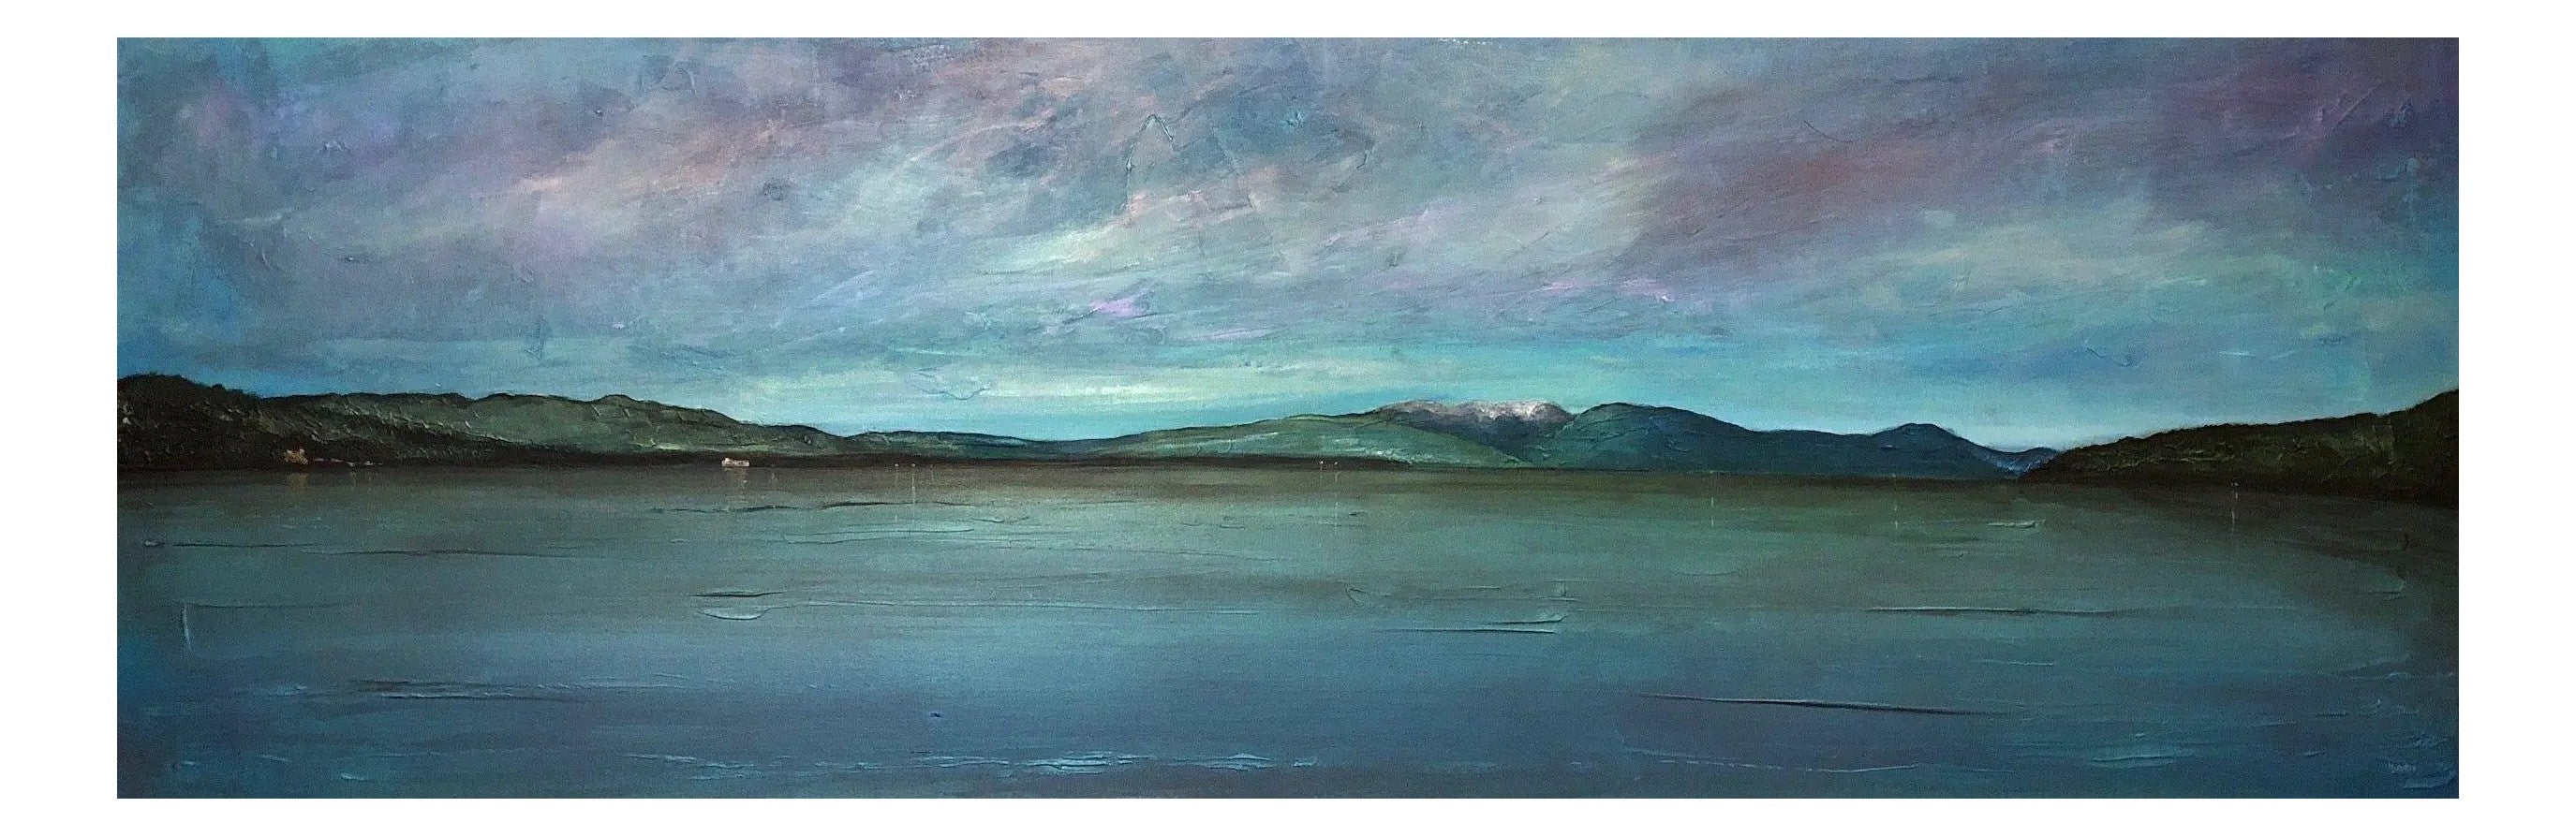 Loch Lomond From Balloch Castle Country Park Scotland Panoramic Fine Art Prints